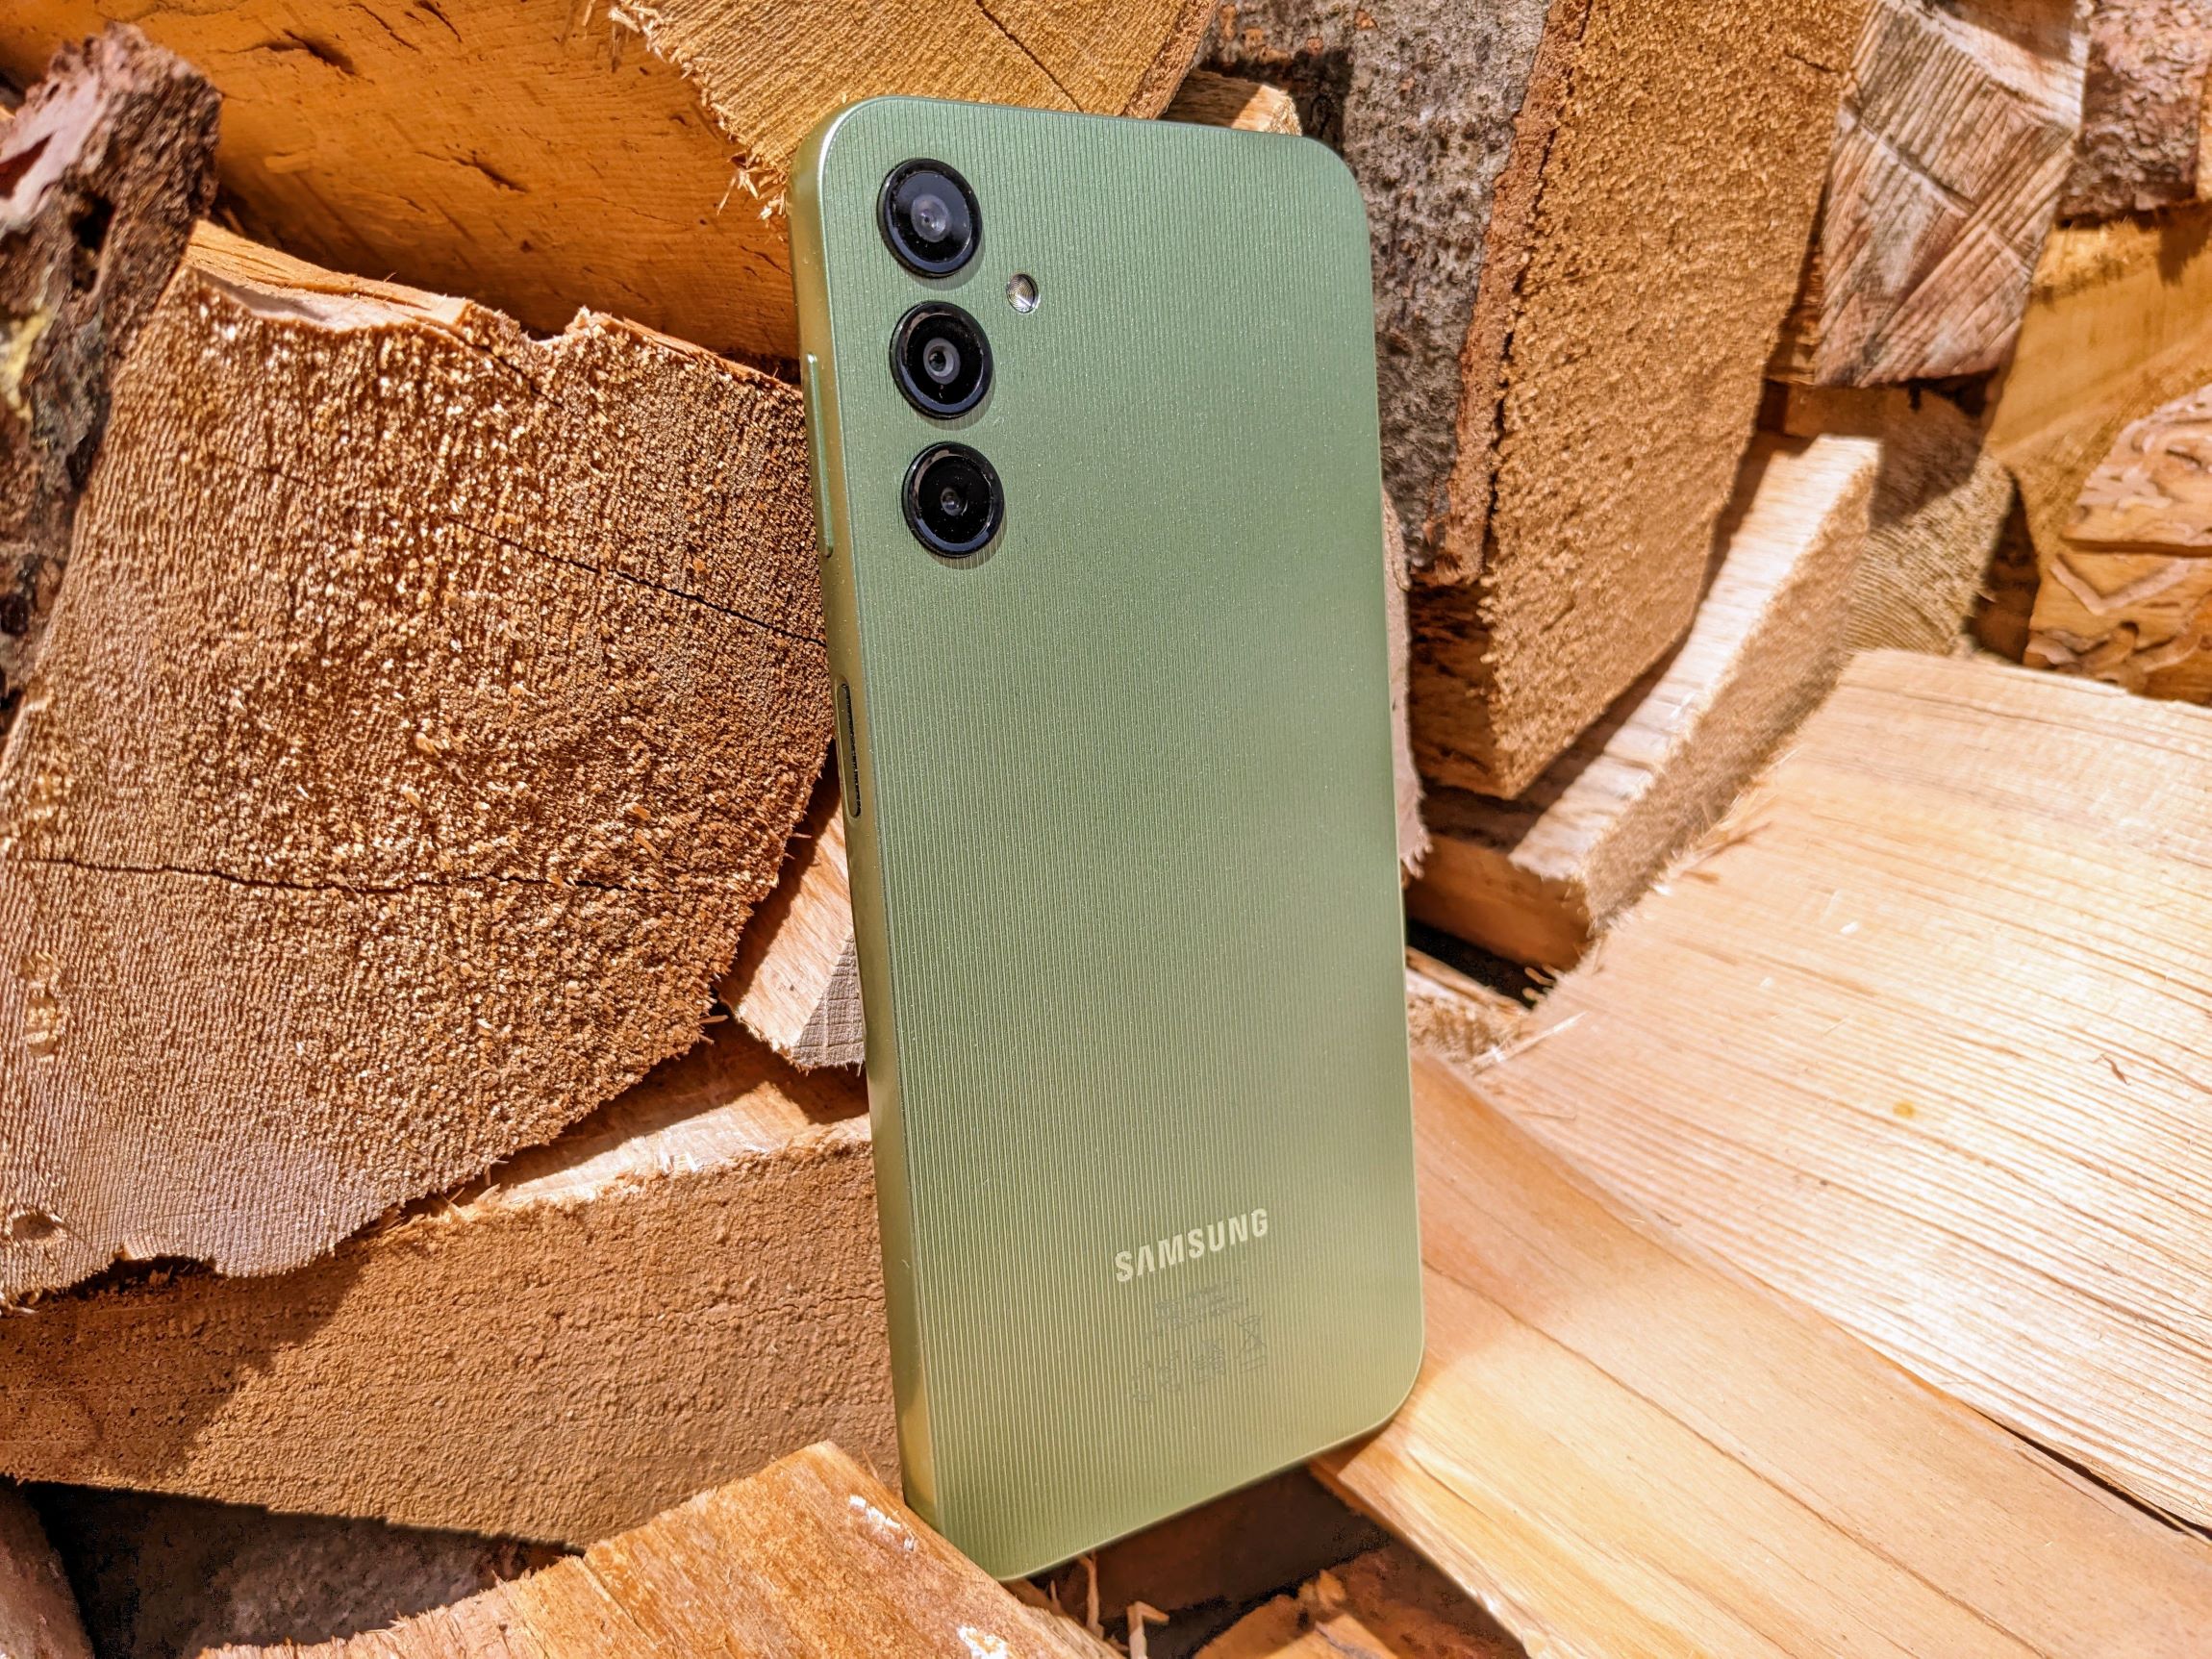 Samsung Galaxy A14 5G review: Alternatives, pros and cons, verdict